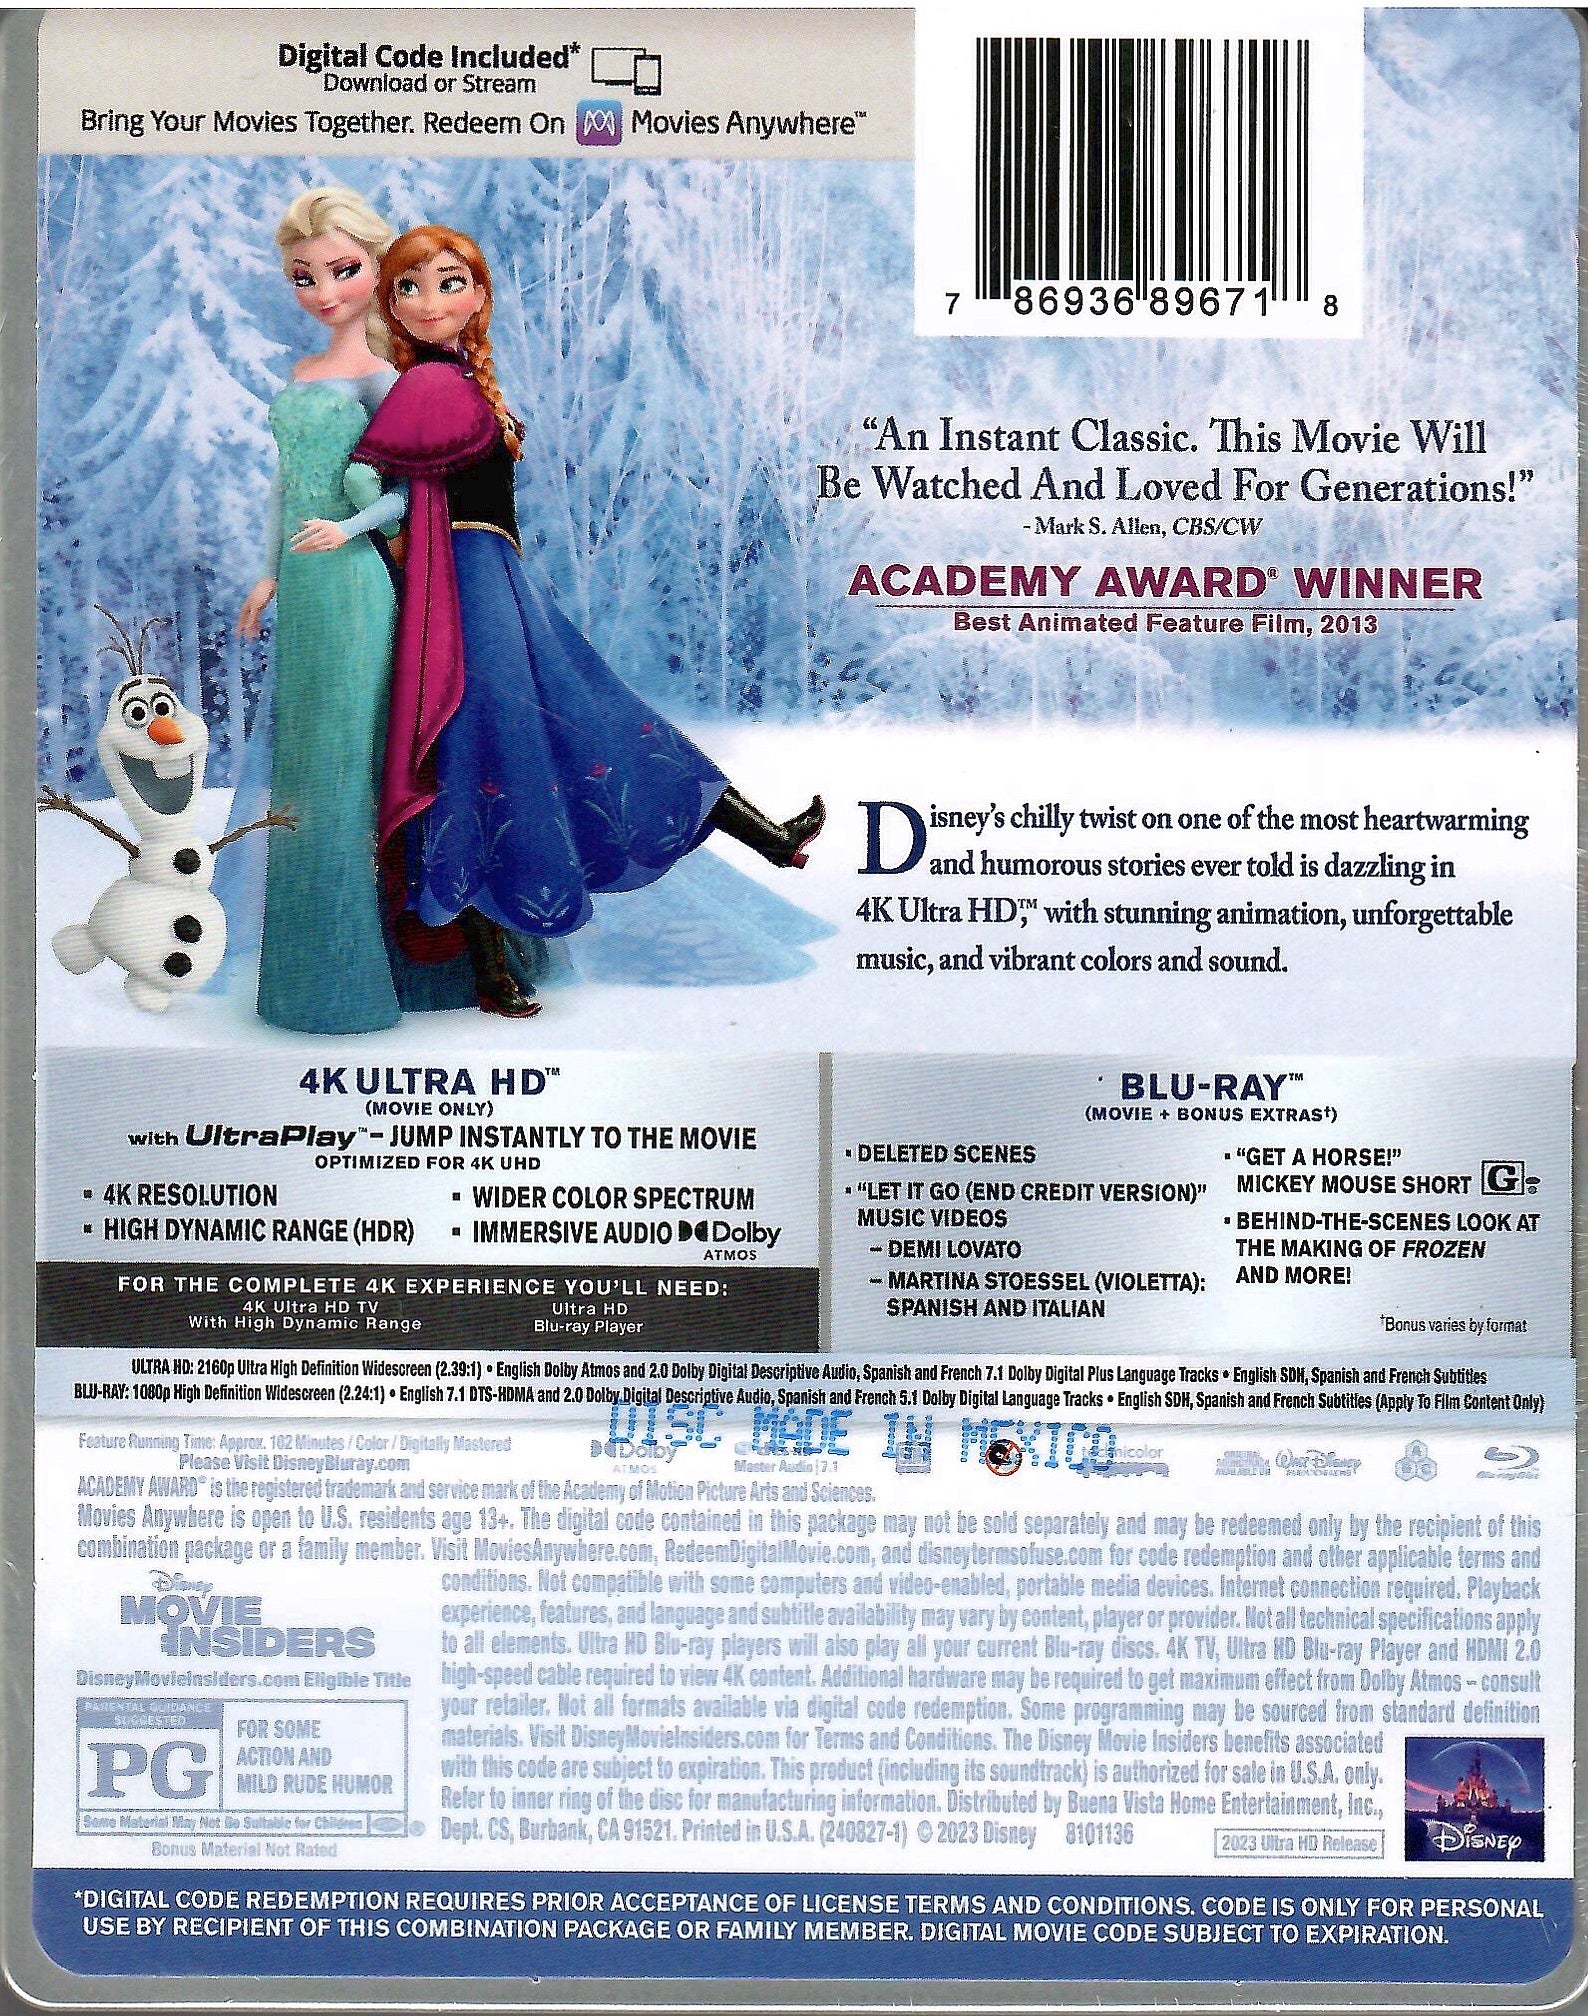  Frozen [2013] (Limited Edition Artwork Sleeve) [DVD